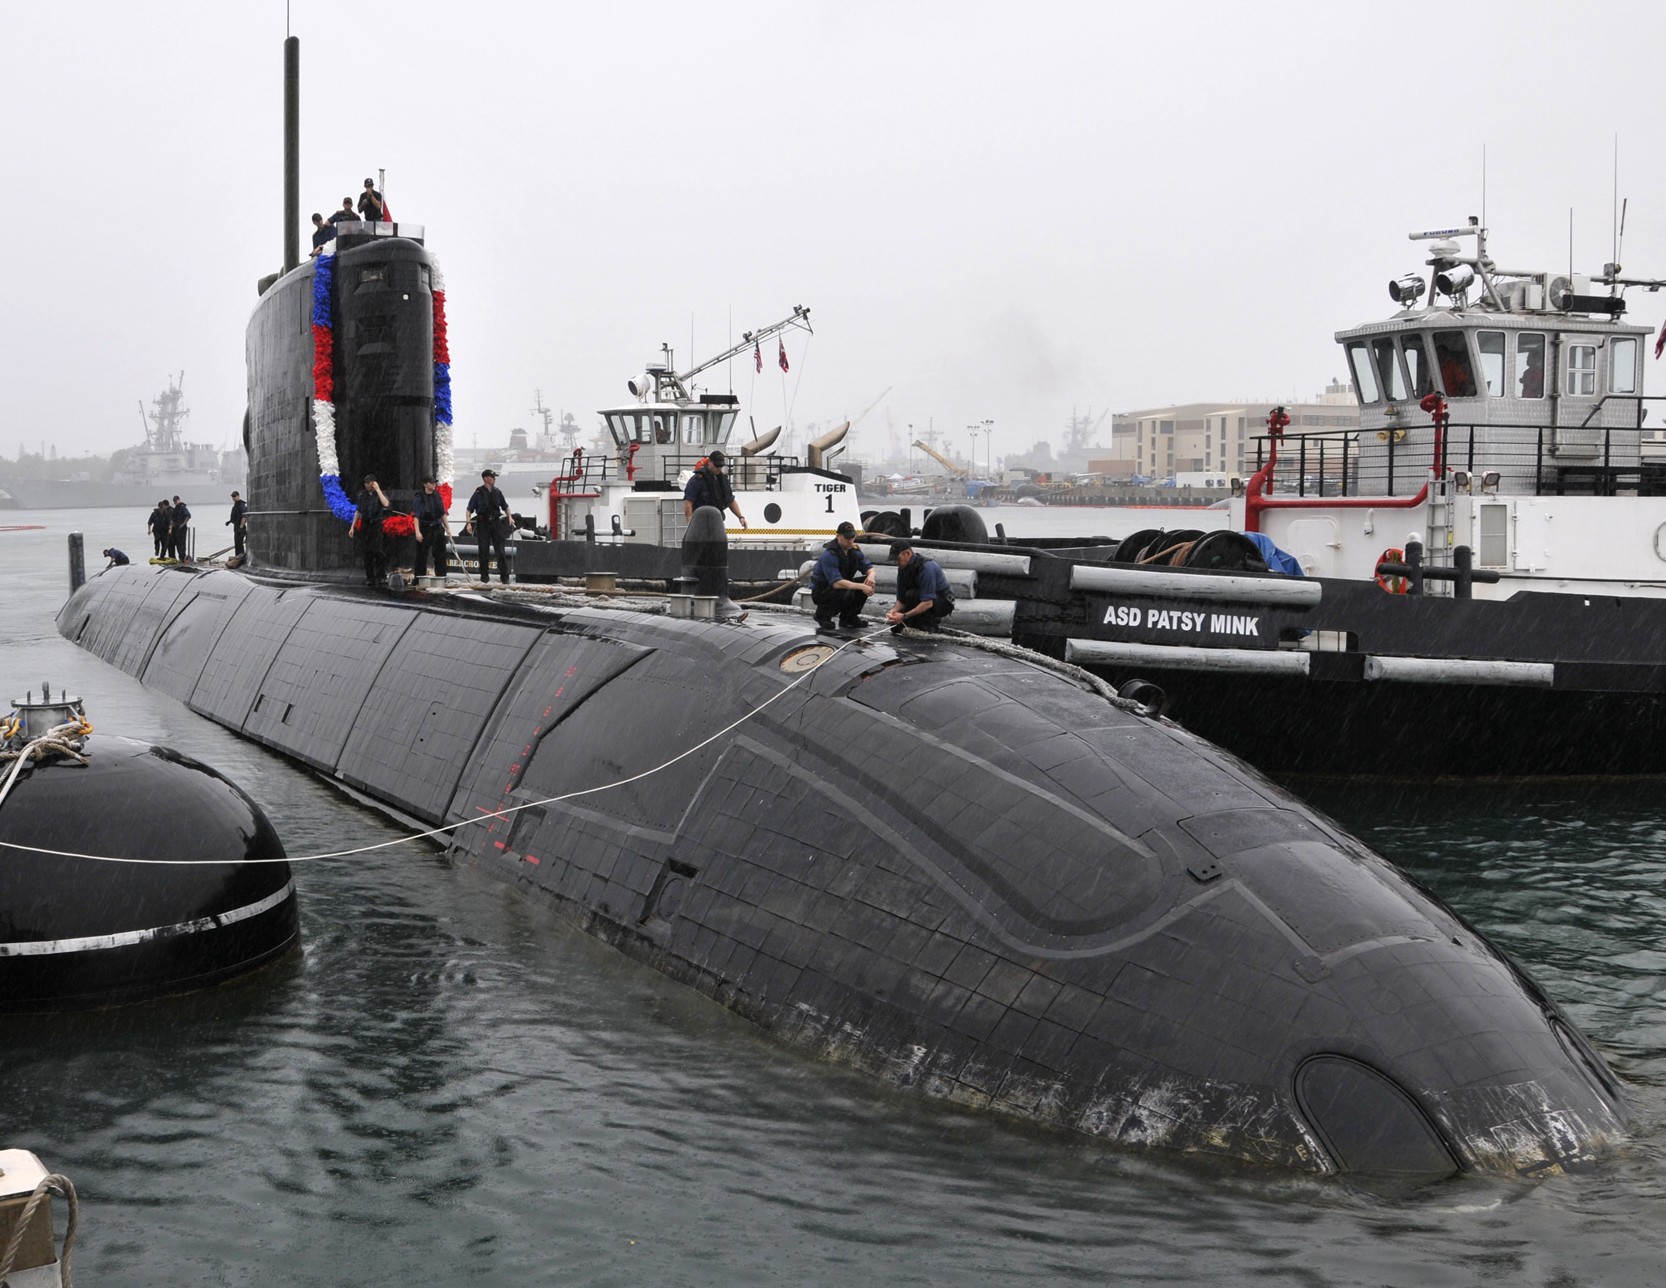 ssk-876 hmcs victoria upholder class attack submarine hunter killer ncsm royal canadian navy 09